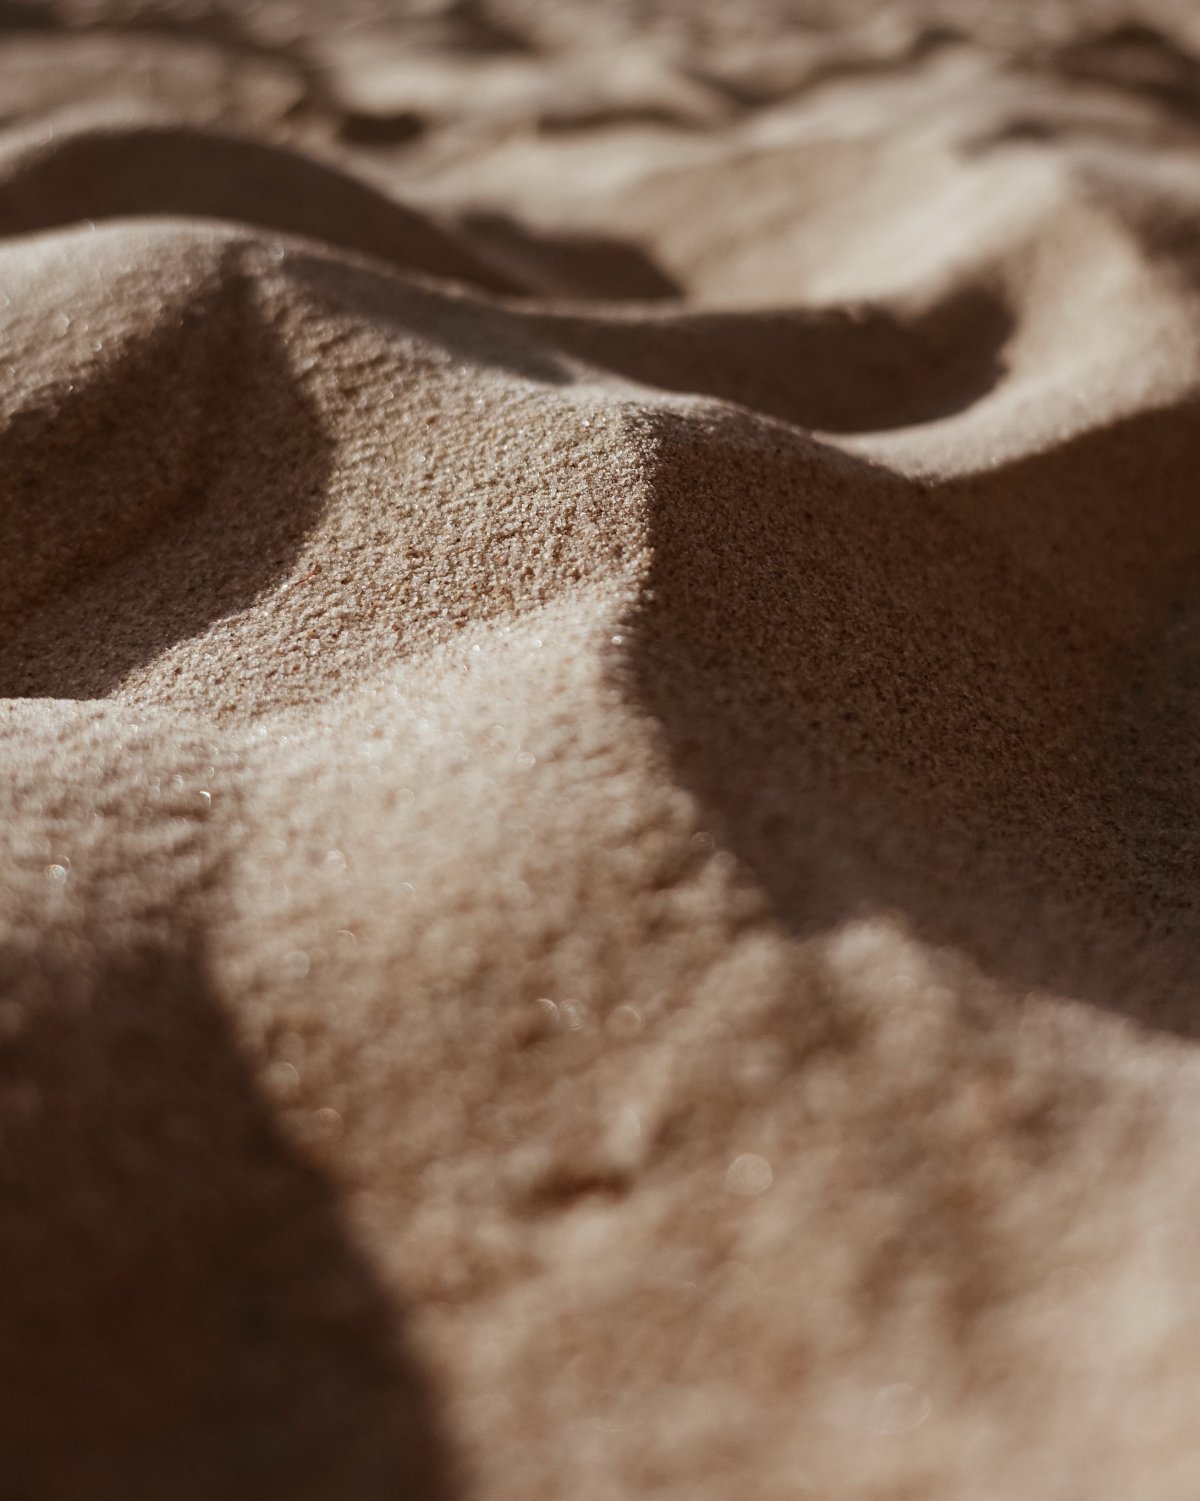 Desert gravel close-up picture